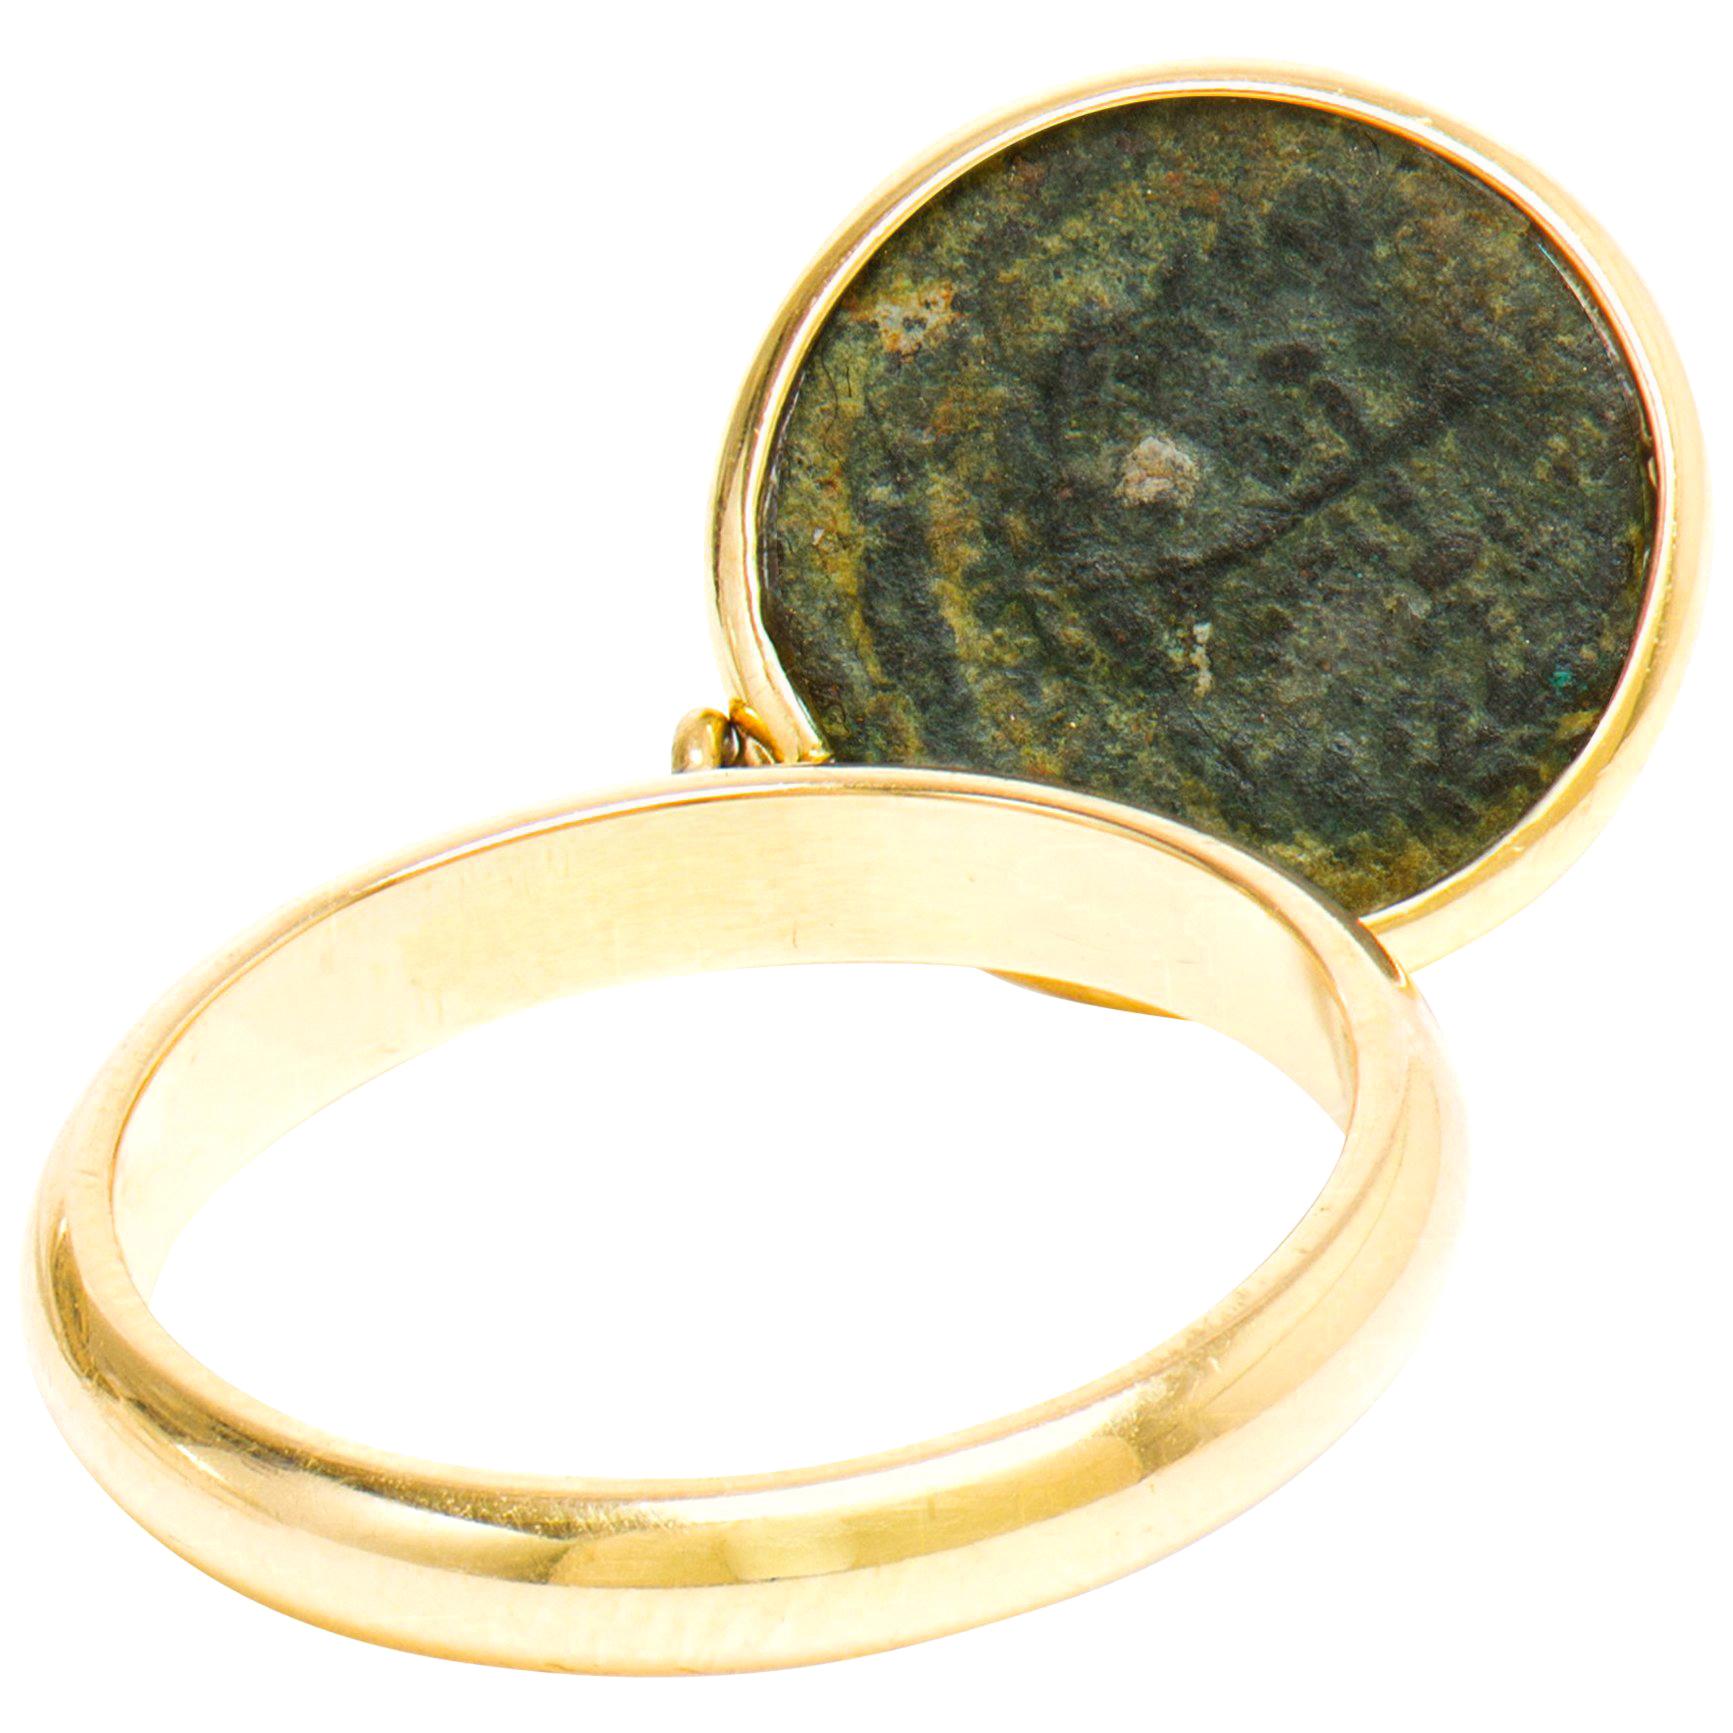 Dubini Emperor Flip Ancient Roman Bronze Coin Bague en or jaune 18 carats